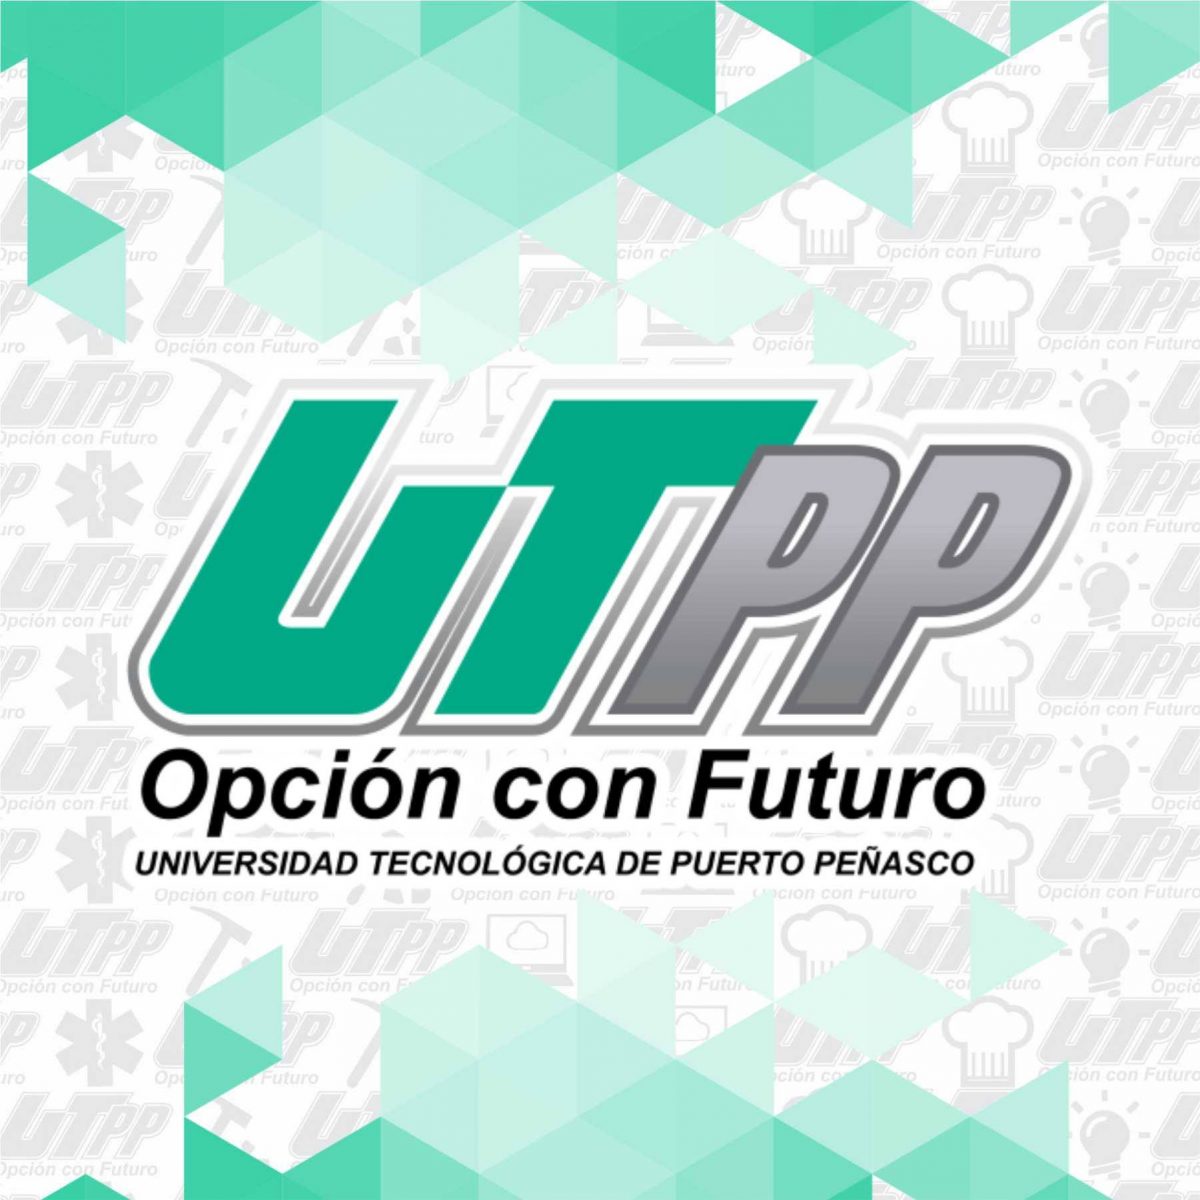 utpp-logo-1200x1200 UTPP to install solar panels